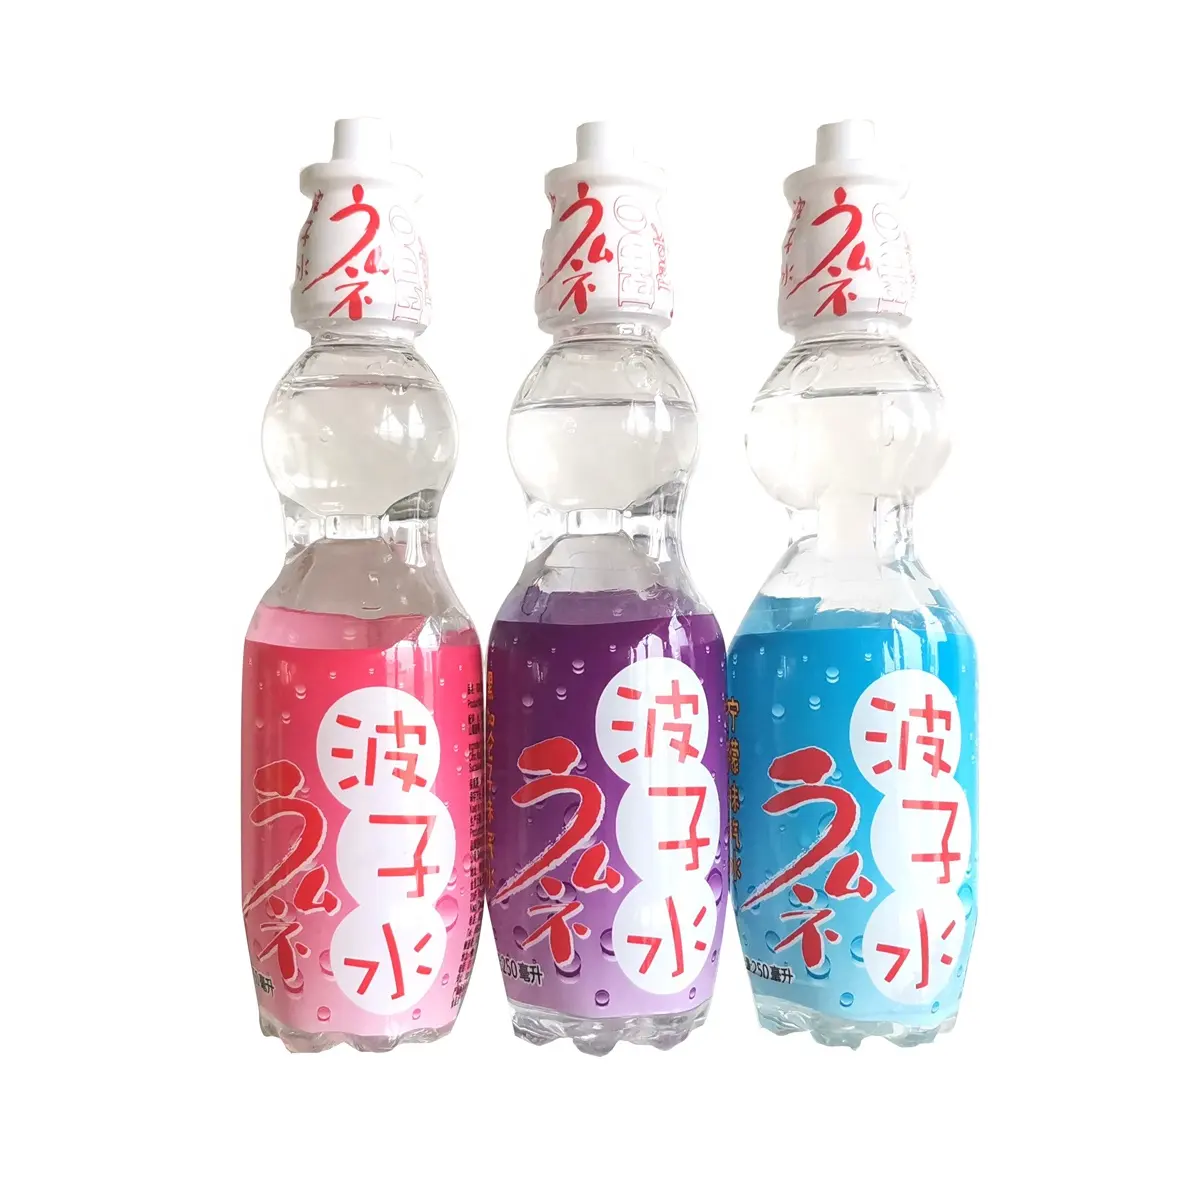 EDO Pack Marmor Soda Drink im japanischen Stil